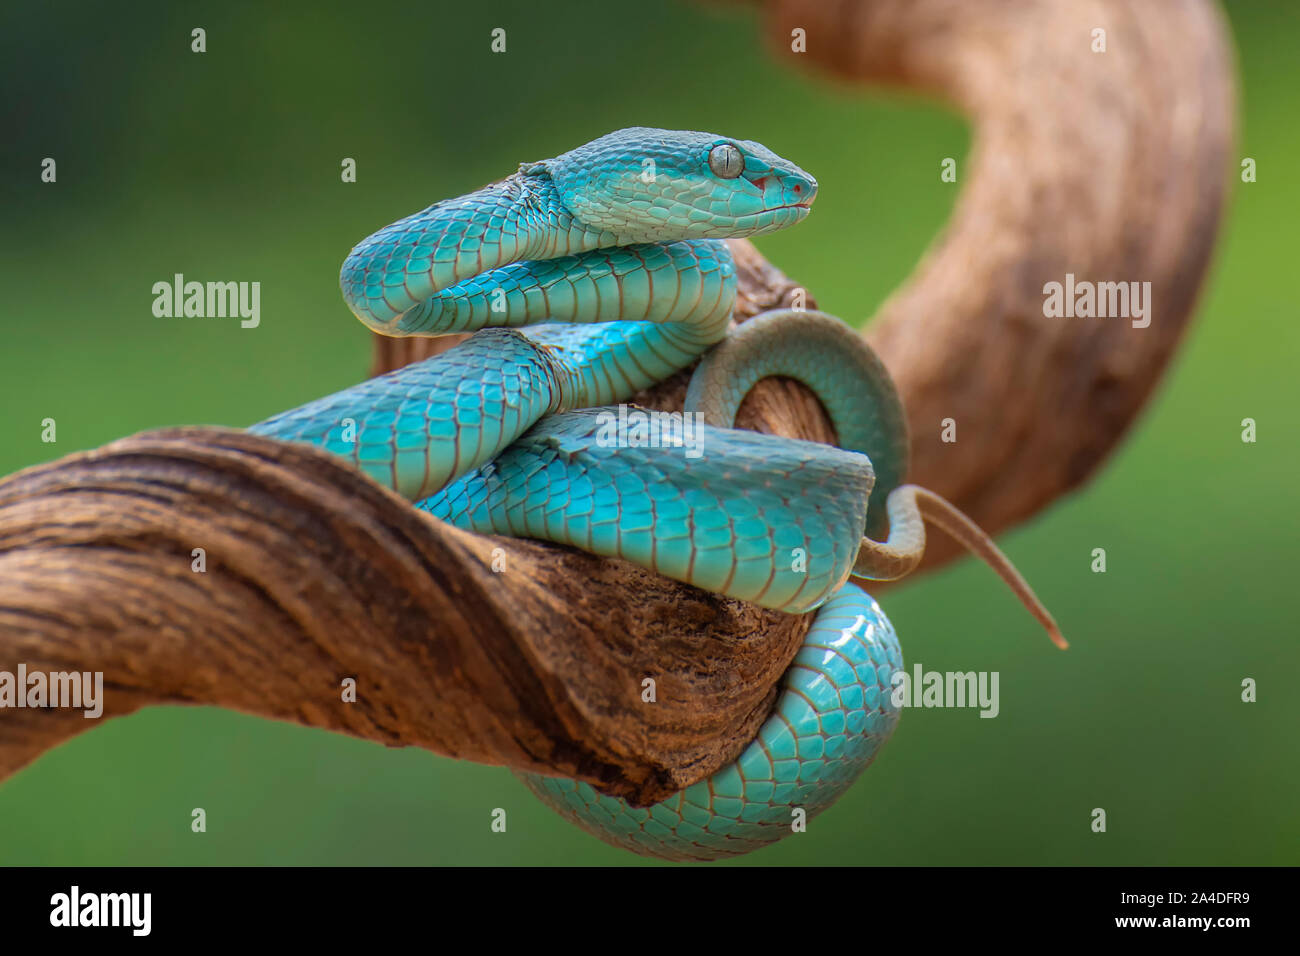 Blue white-lipped pit viper (Trimeresurus insularis) on a branch, Indonesia Stock Photo